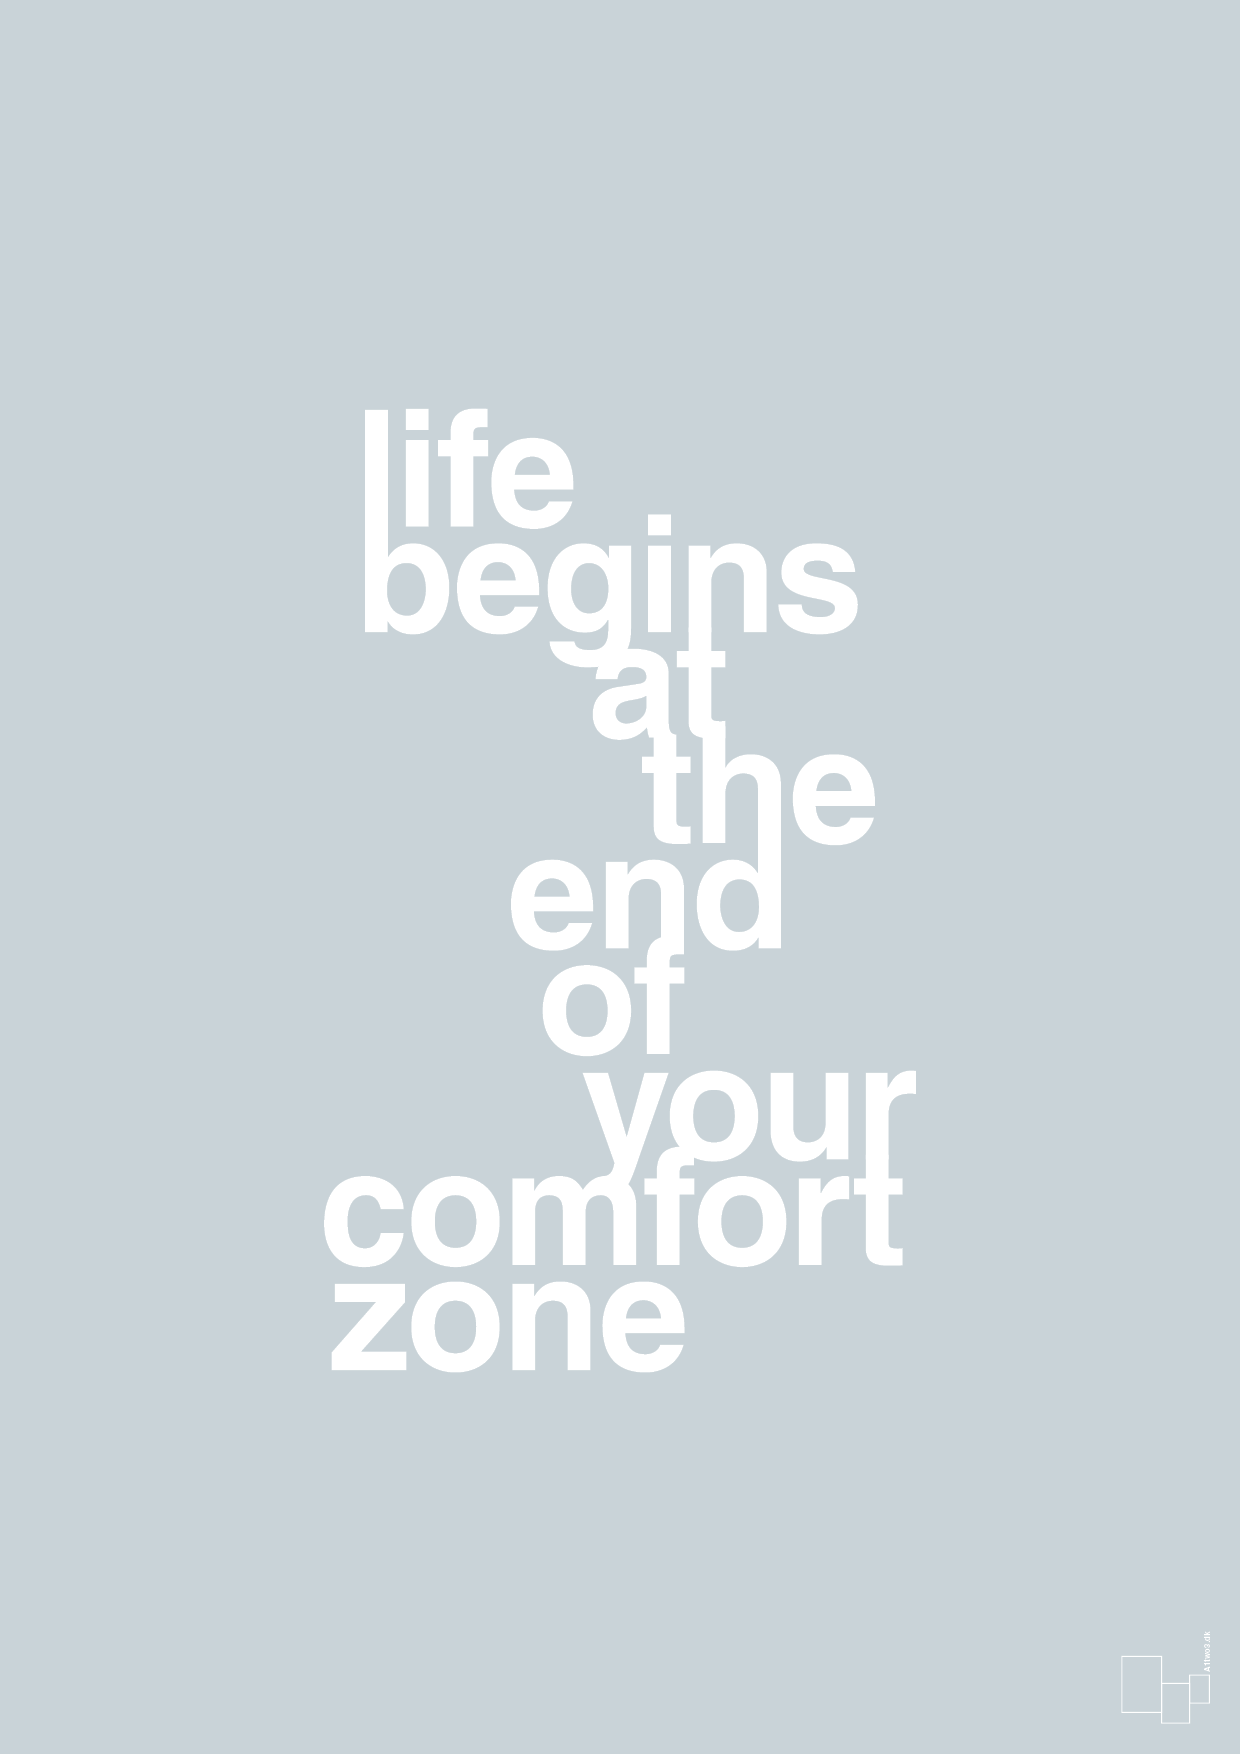 life begins at the end of your comfort zone - Plakat med Ordsprog i Light Drizzle